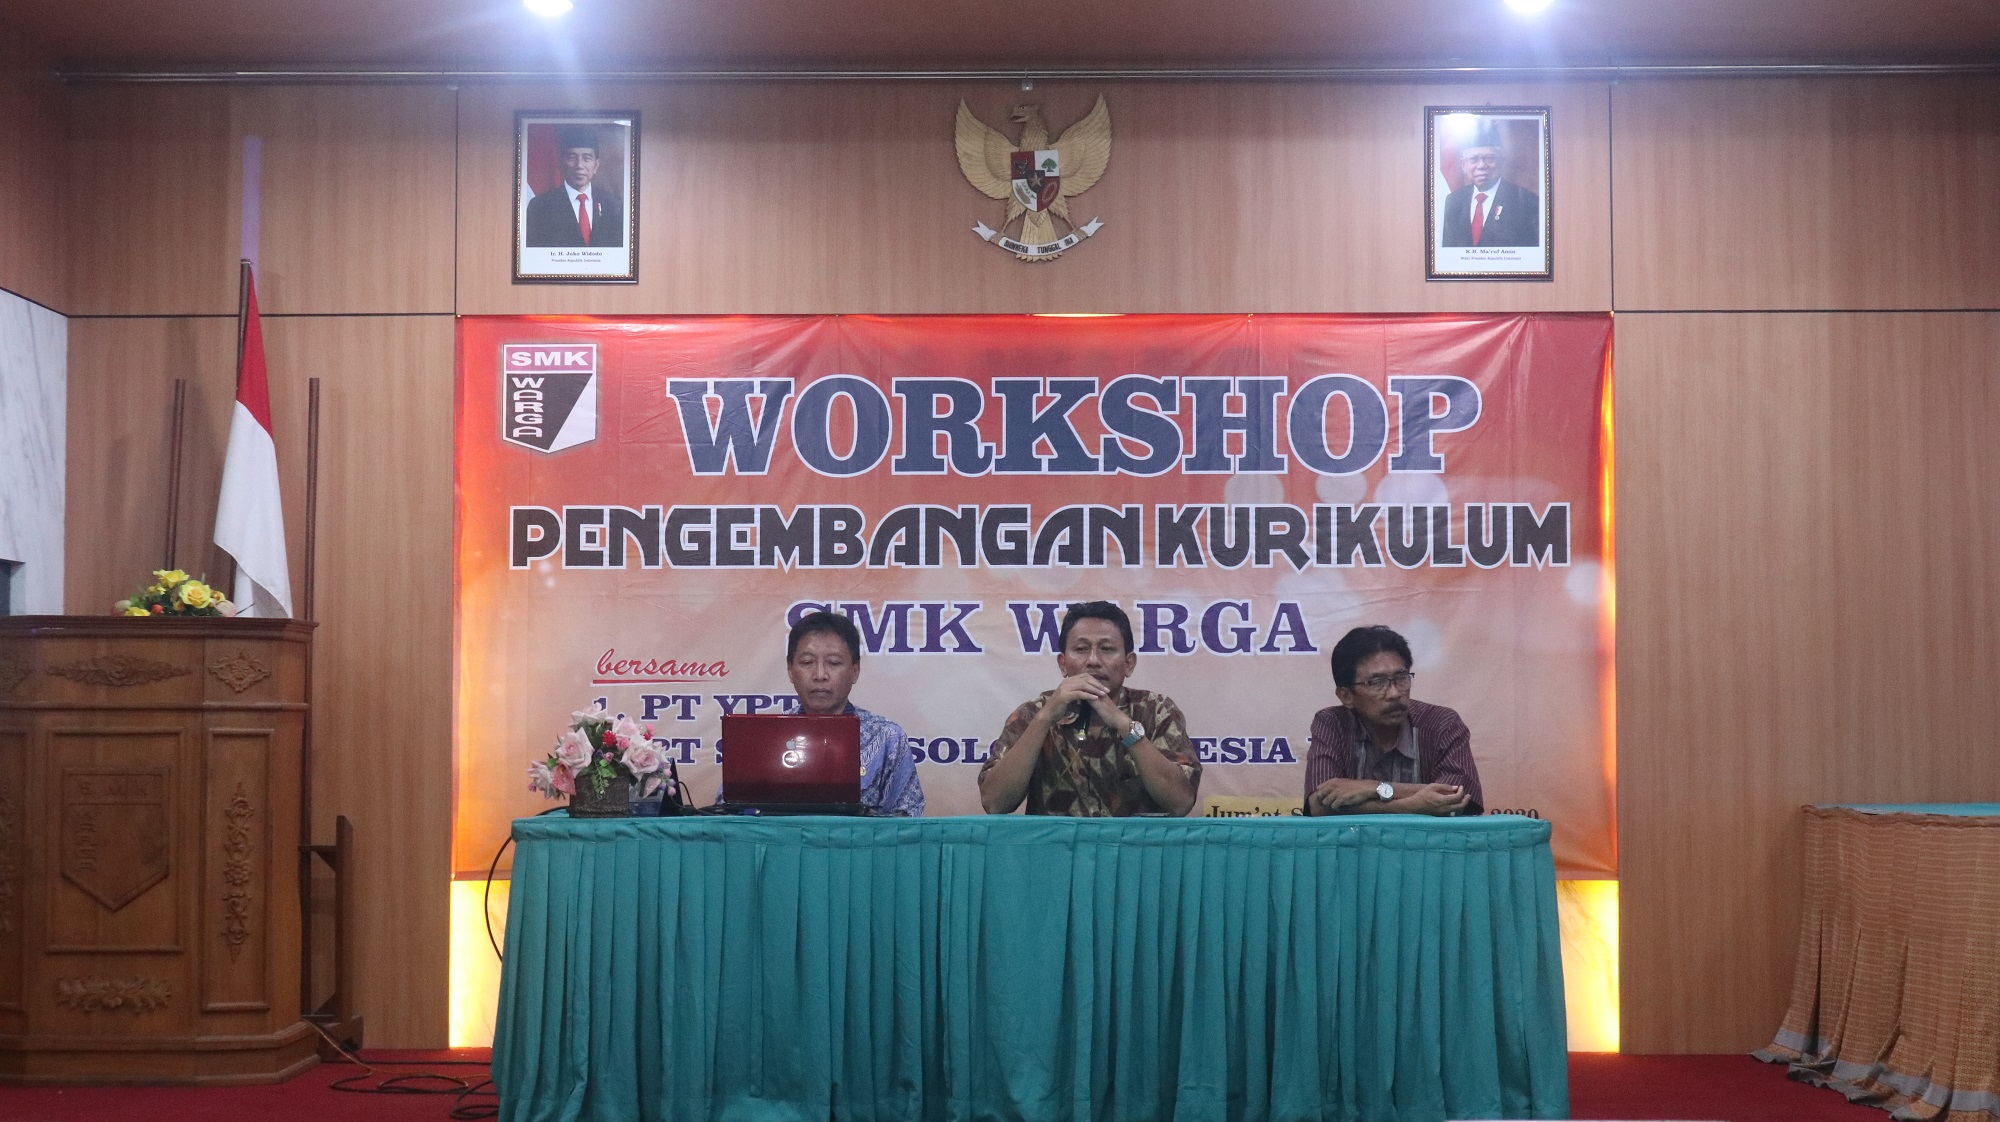 Workshop Pengembangan Kurikulum SMK WARGA Surakarta Bersama PT.YPTI dan PT. Suzuki Solo Indonesia Utama